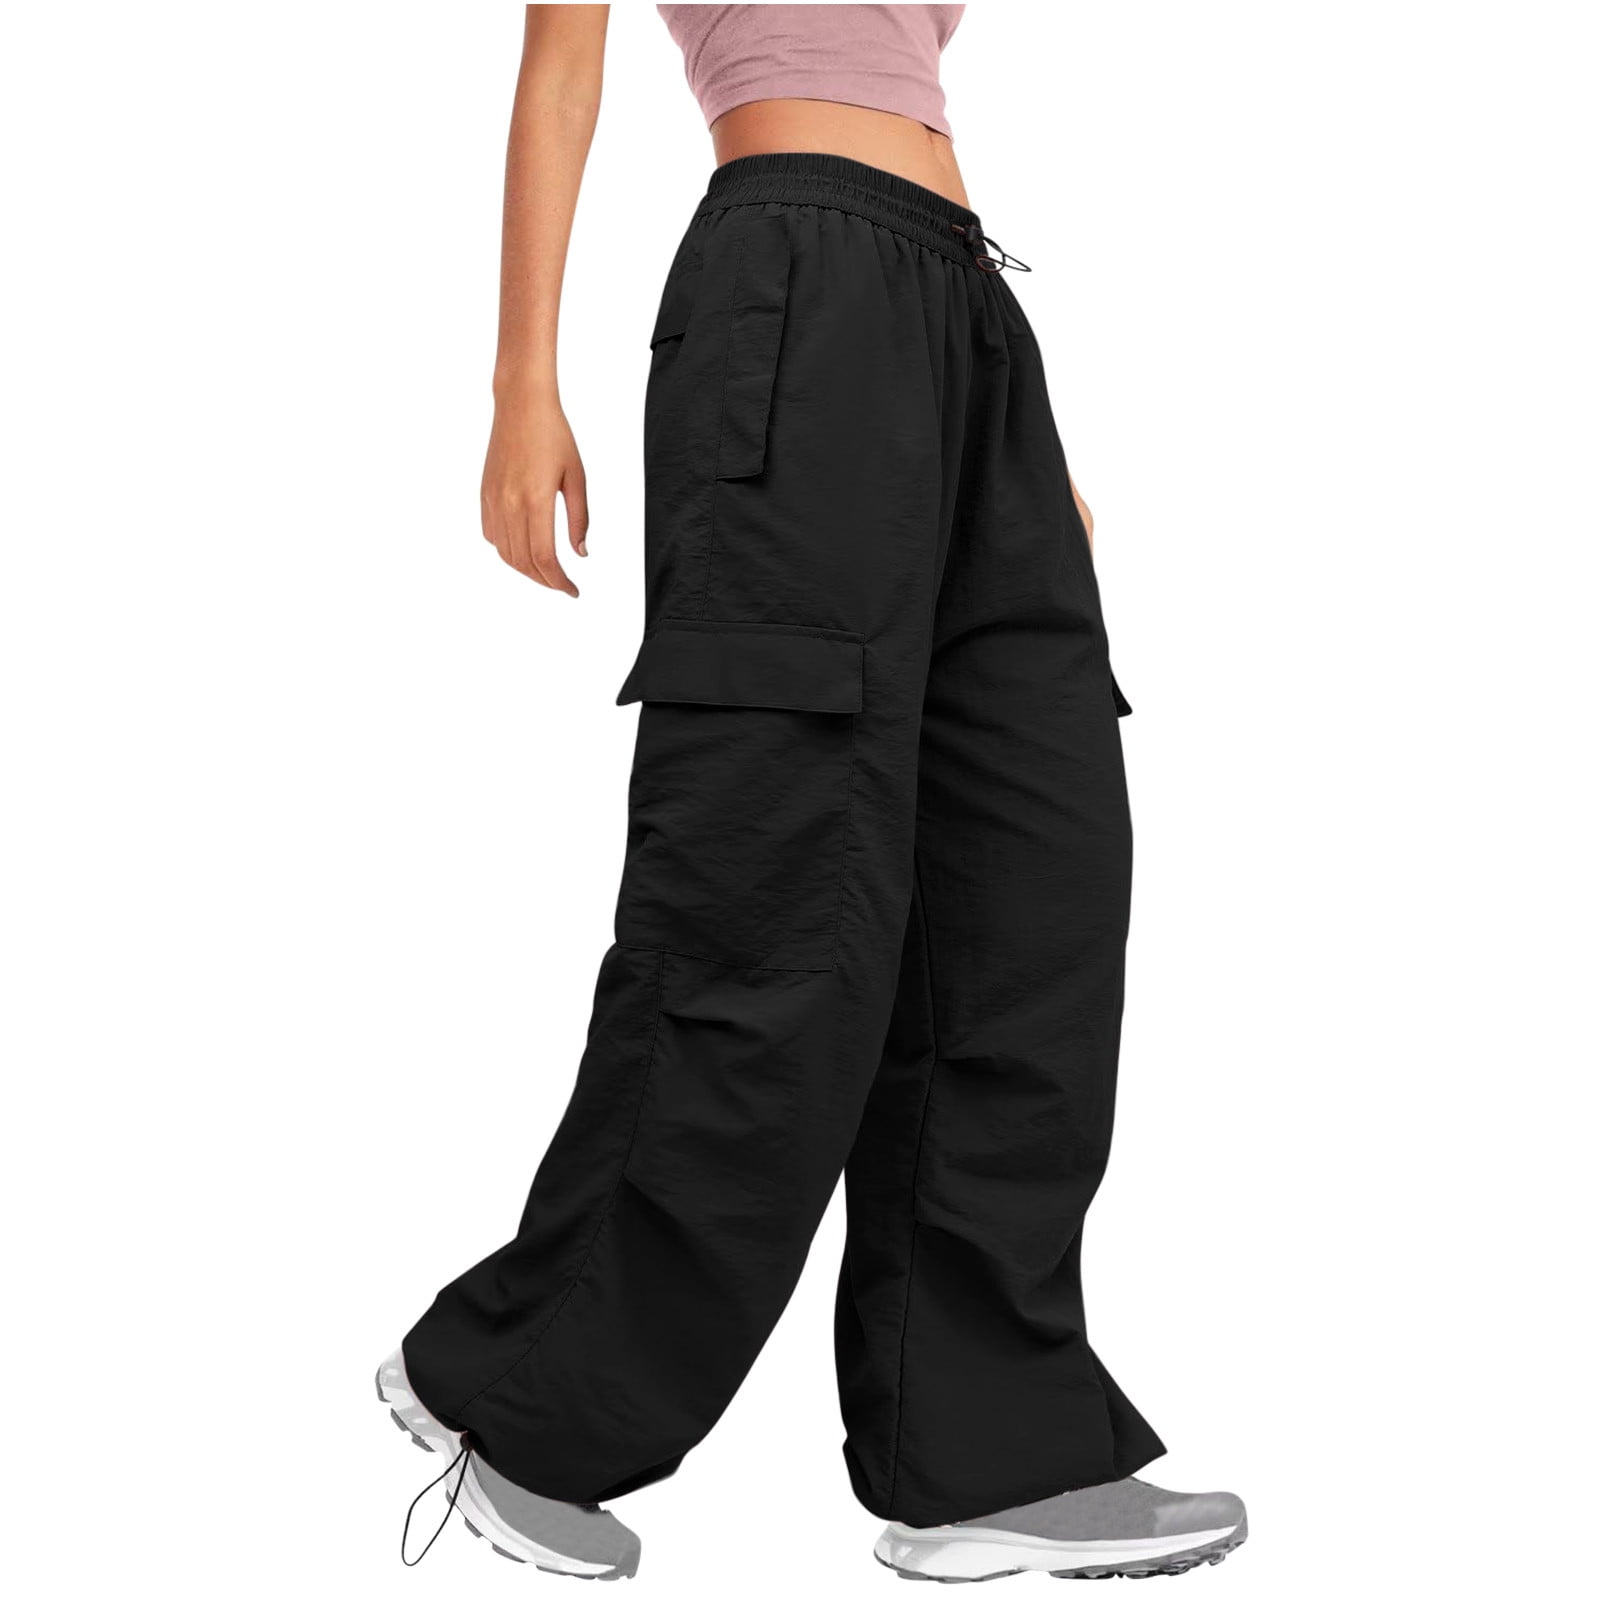 RYRJJ Parachute Pants for Women Baggy Cargo Pants Multi-Pocket Elastic ...